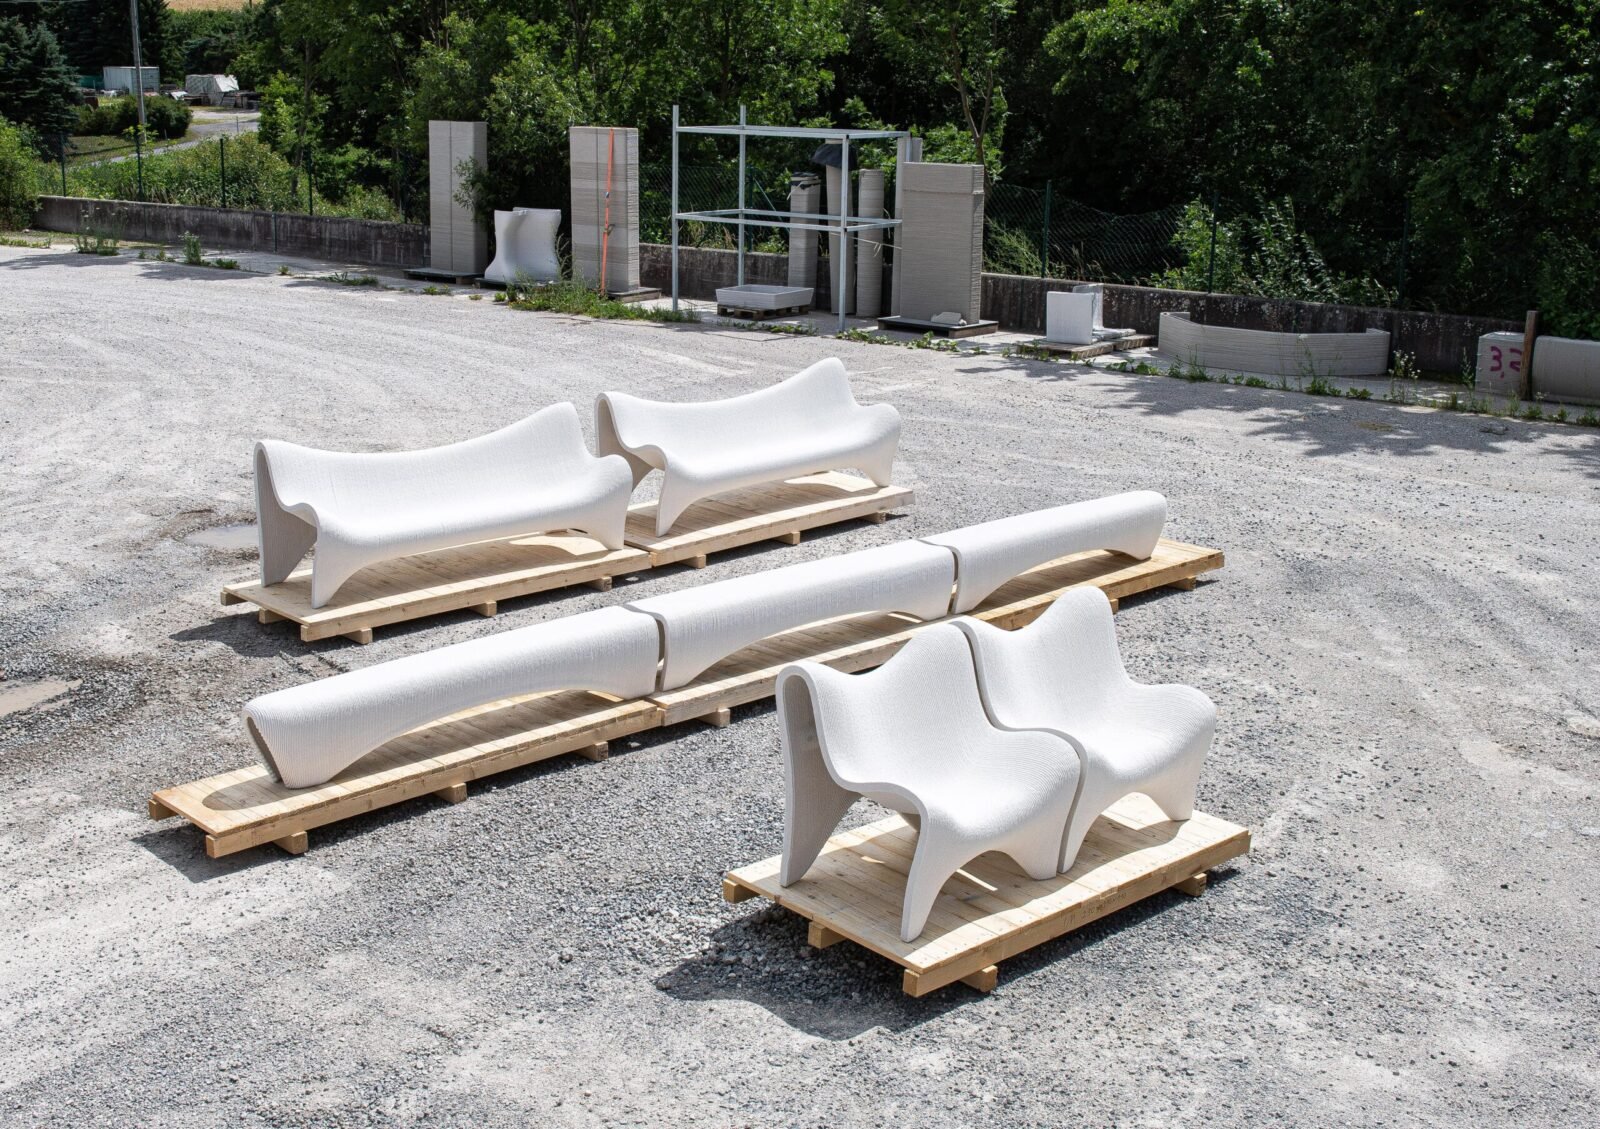 3D-printed street furniture